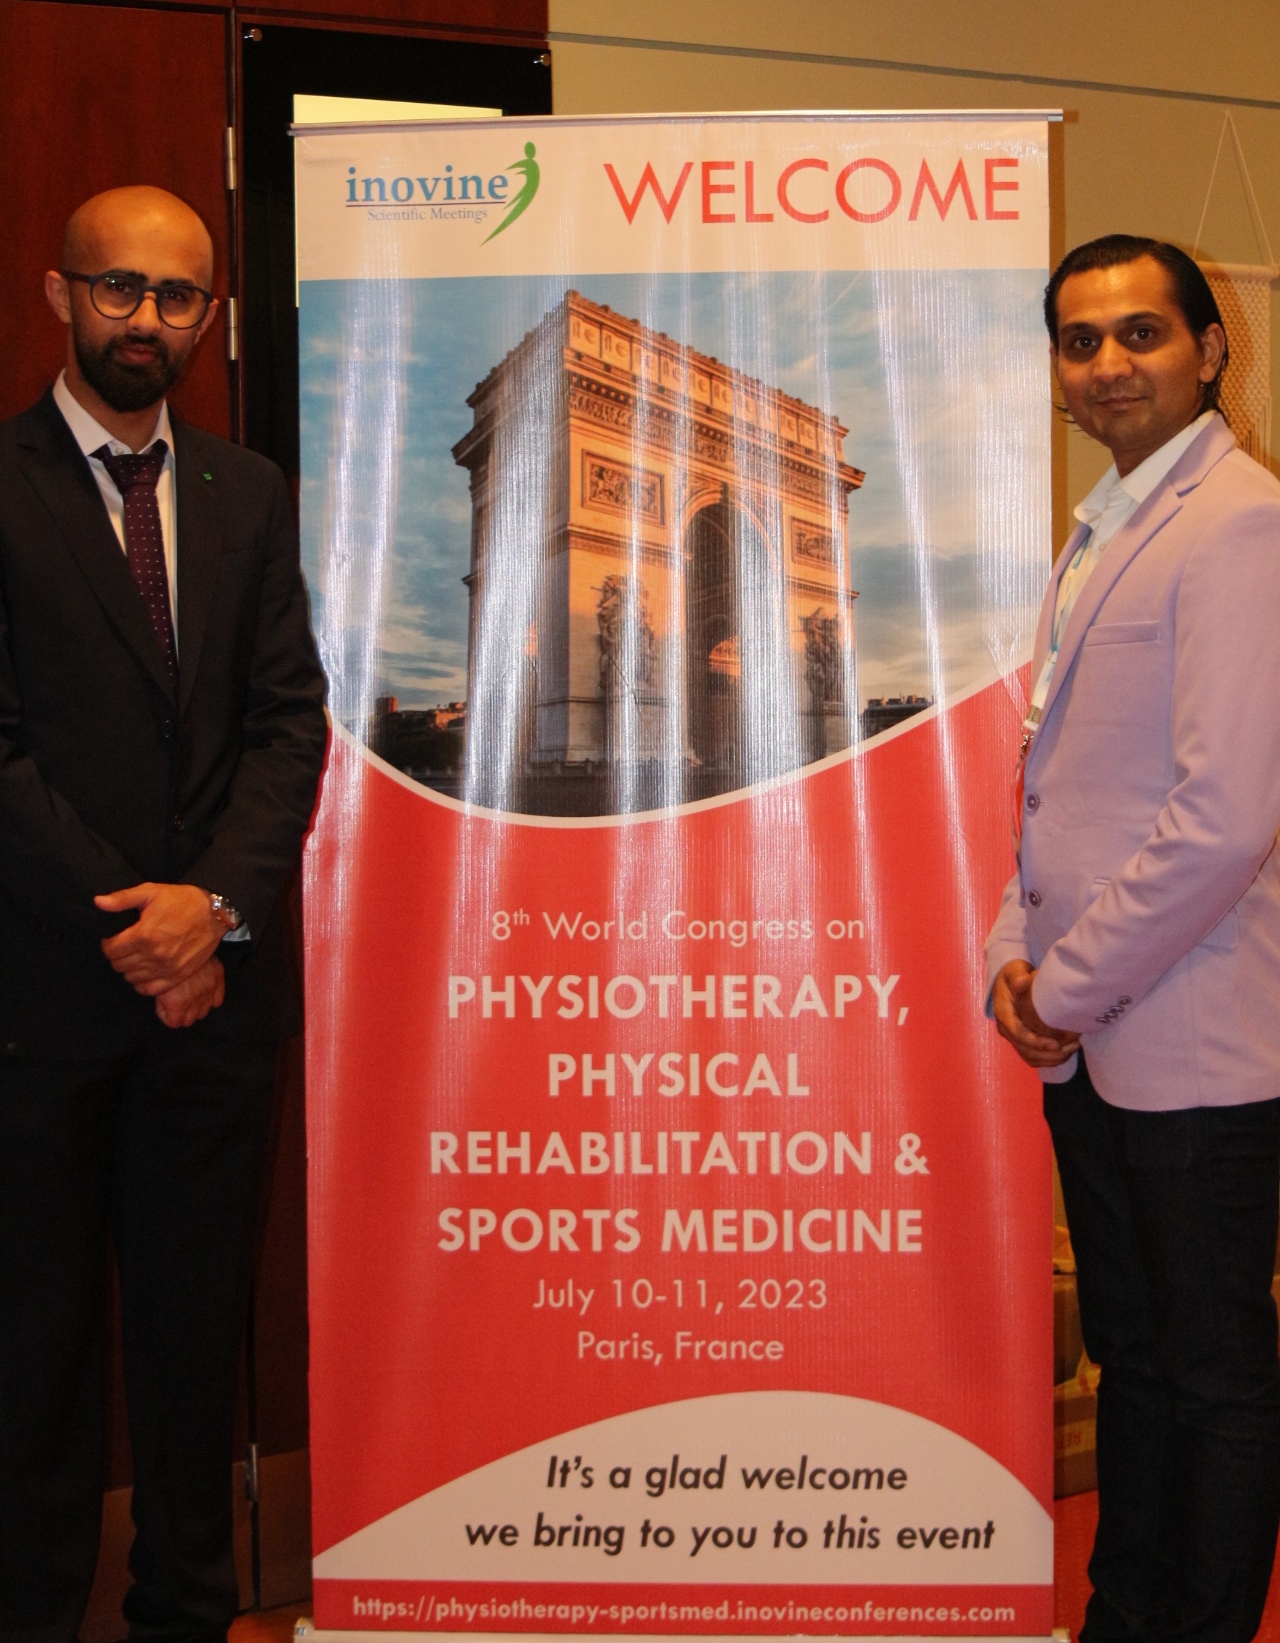 World Physiotherapy Conferene 2022, Dubai